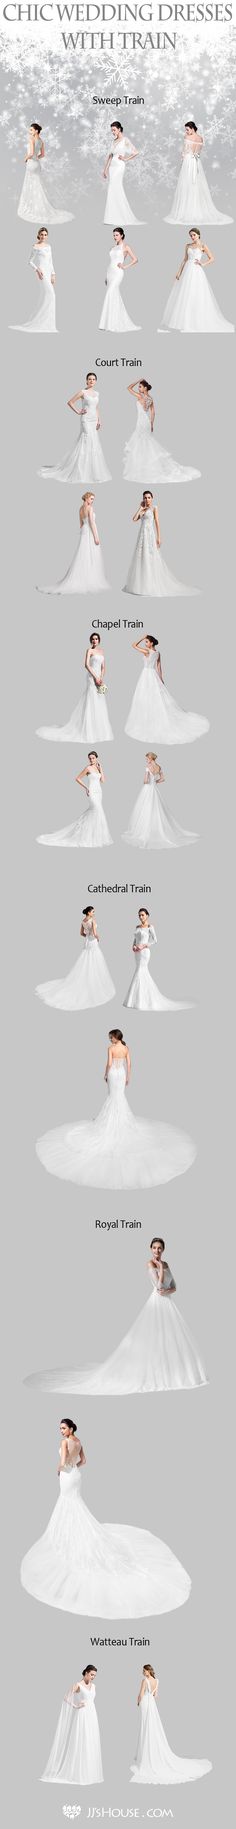 CHIC Wedding Dresses With TRAIN! CHOOSE ONE NOW! <a class="pintag searchlink" data-query="%23weddingdress" data-type="hashtag" href="/search/?q=%23weddingdress&rs=hashtag" rel="nofollow" title="#weddingdress search Pinterest">#weddingdress</a>